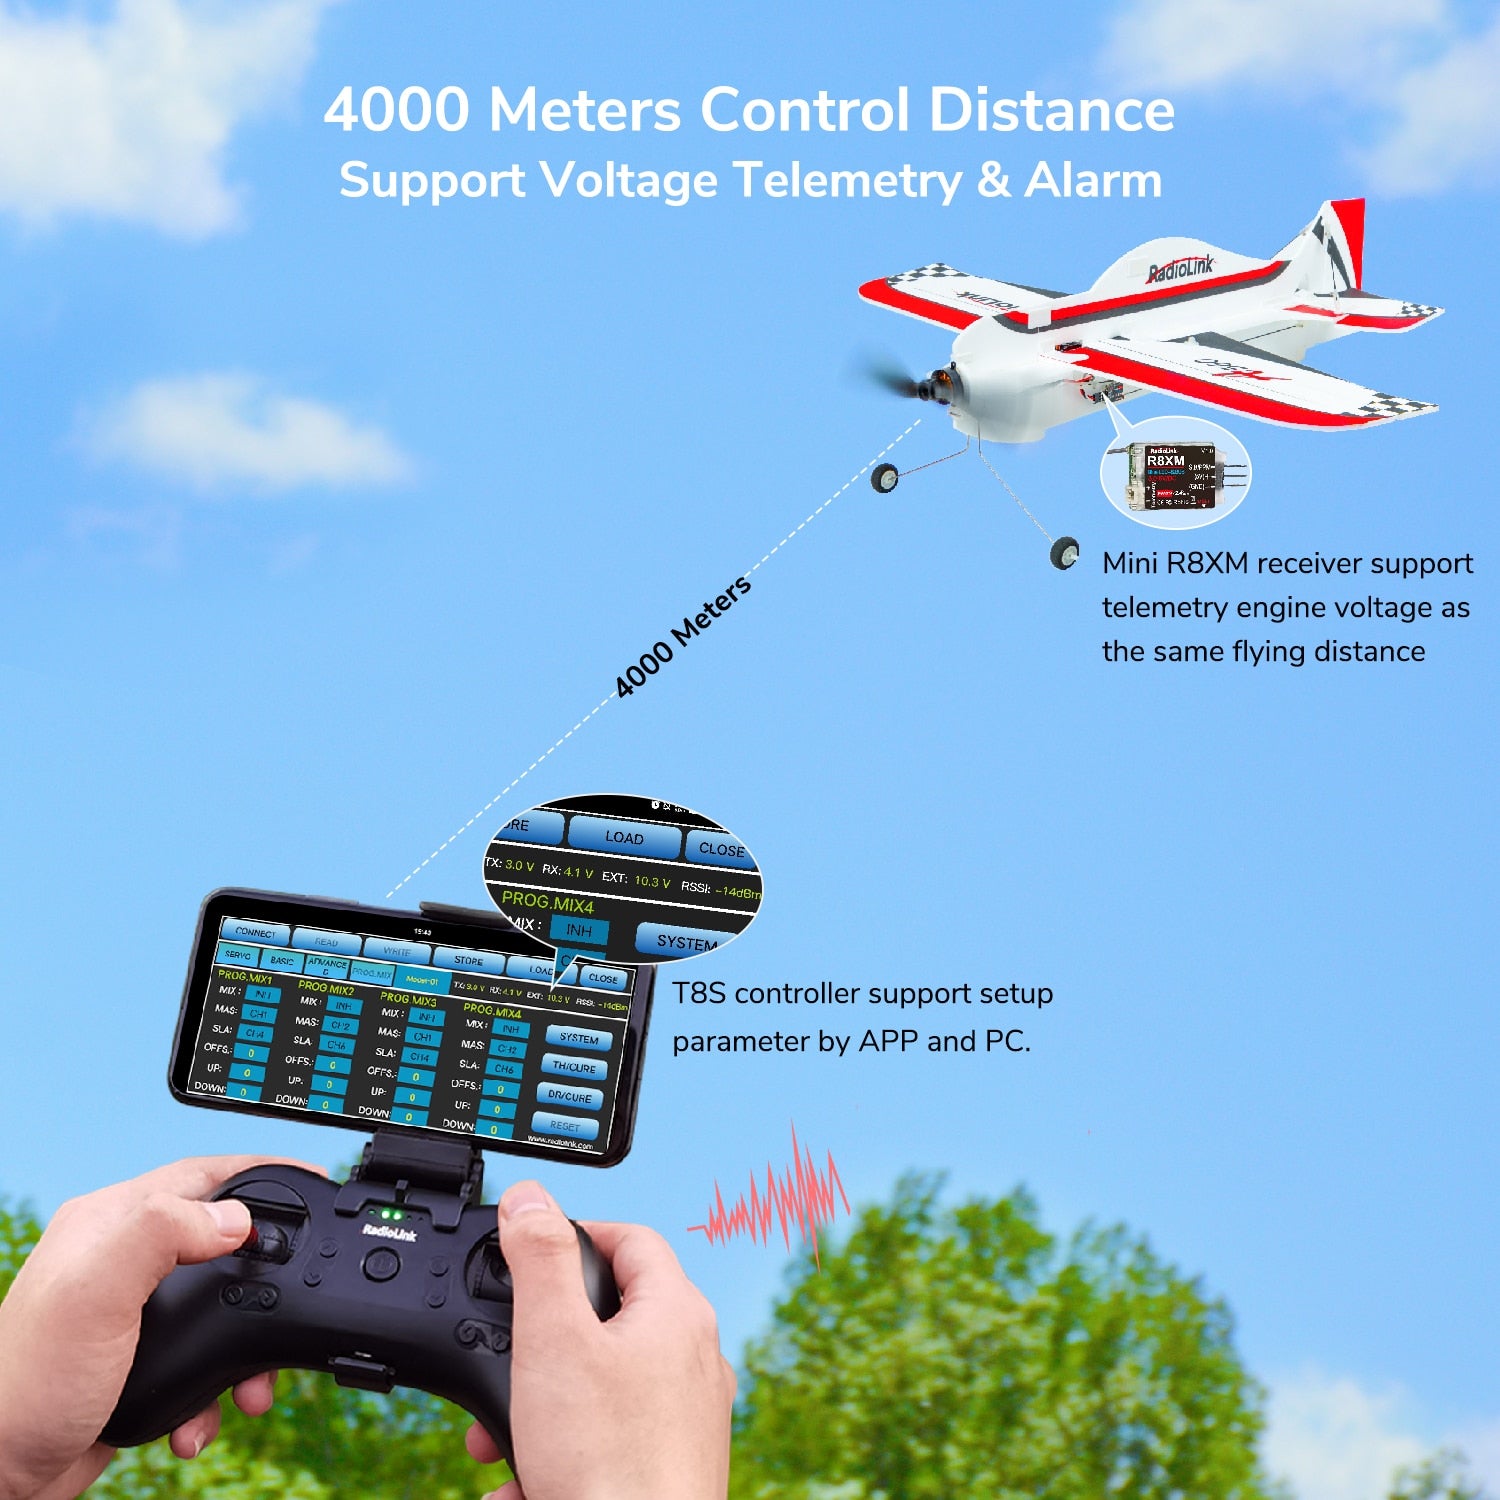 4000 Meters Control Distance Support Voltage Telemetry & Alarm Fubcjt